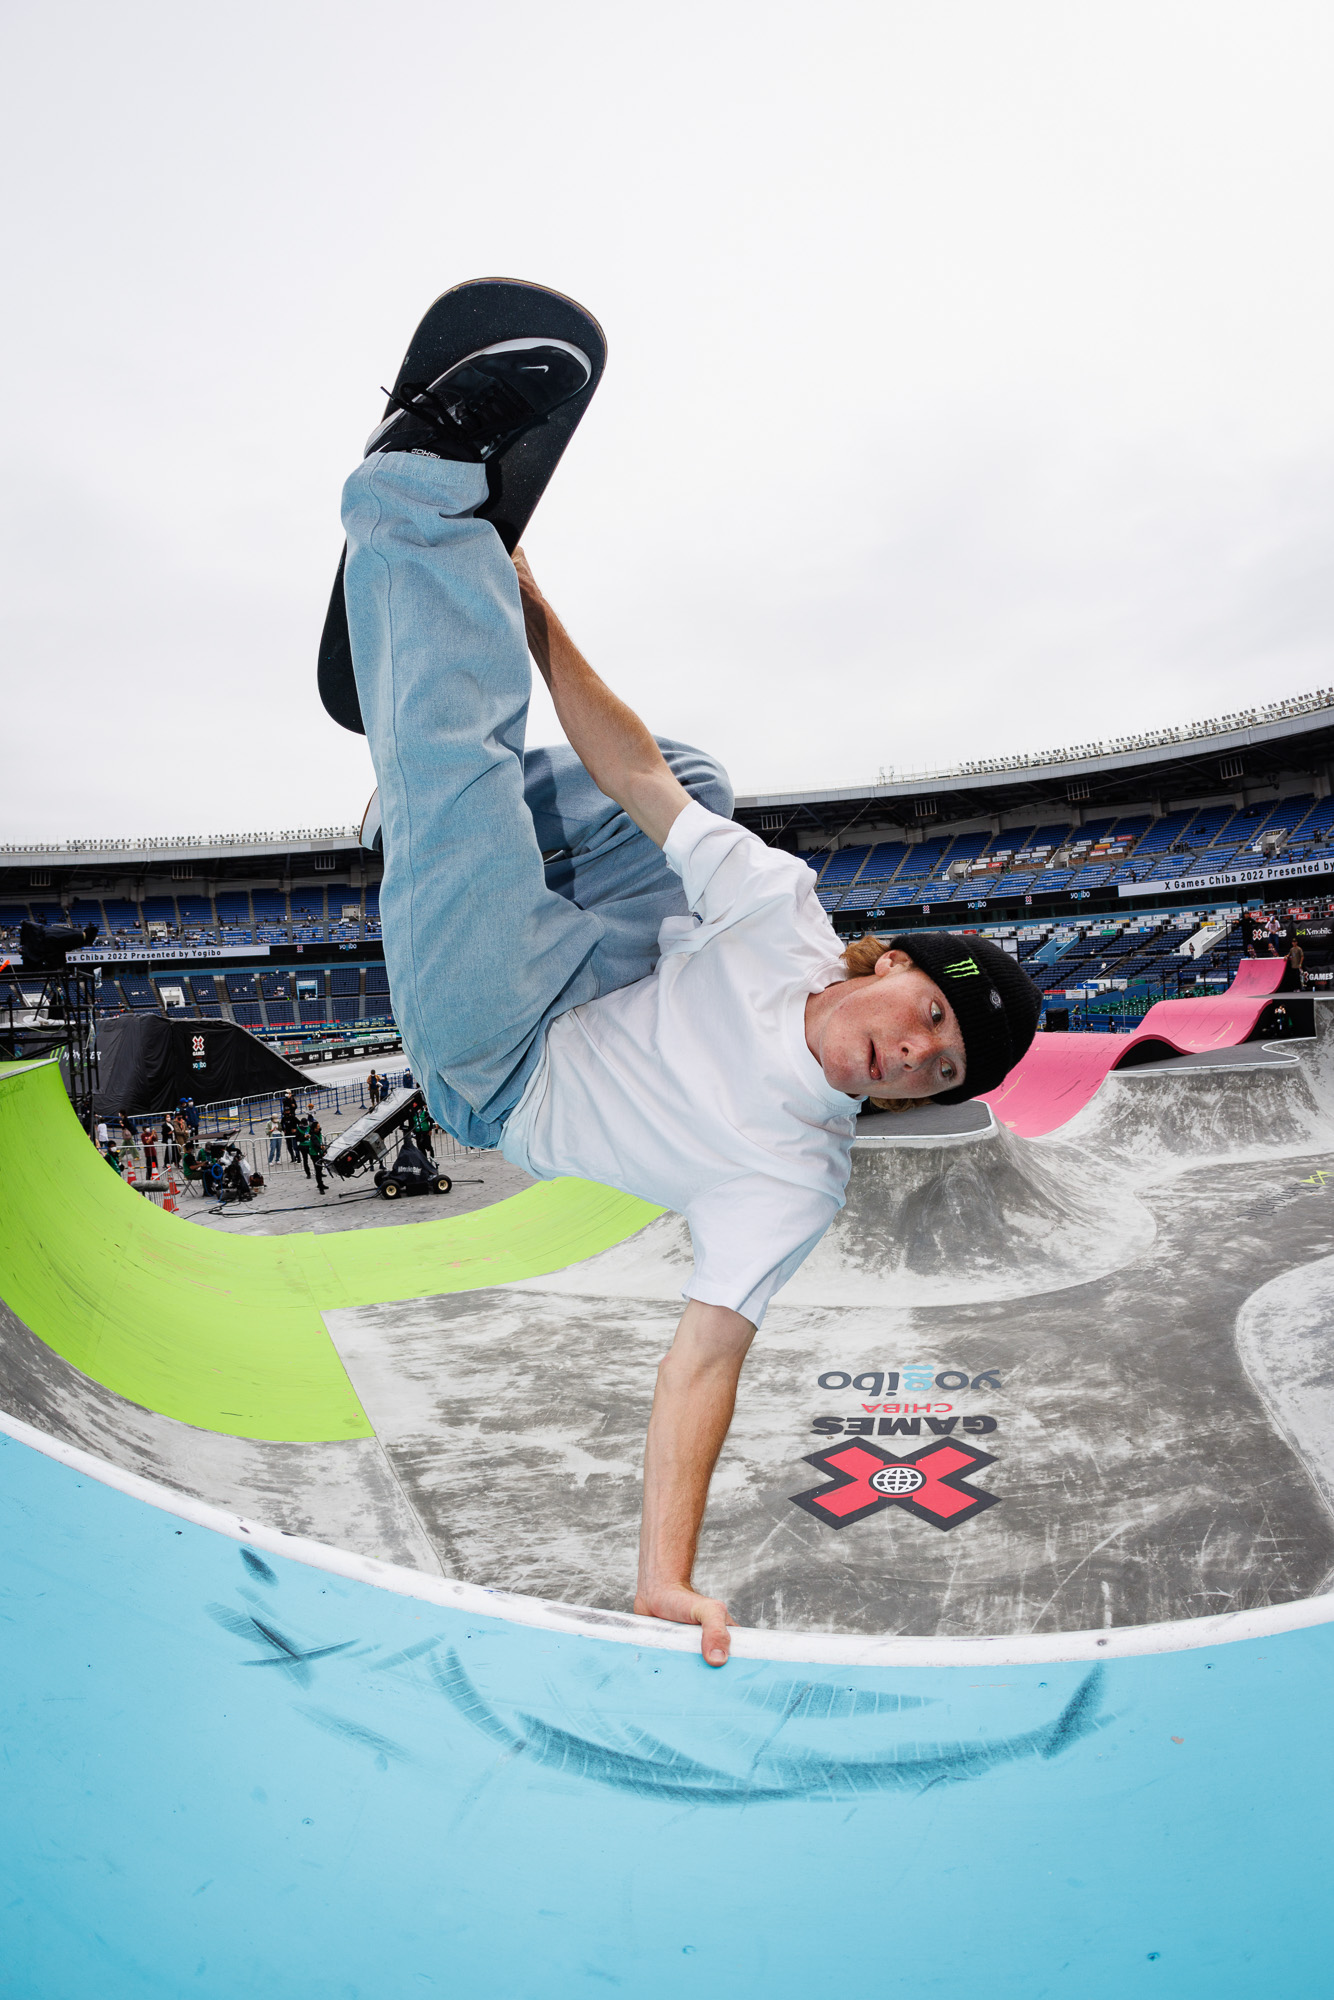 Monster Energy's Kieran Woolley Takes Silver in Men's Skateboard Park at X Games Chiba 2022